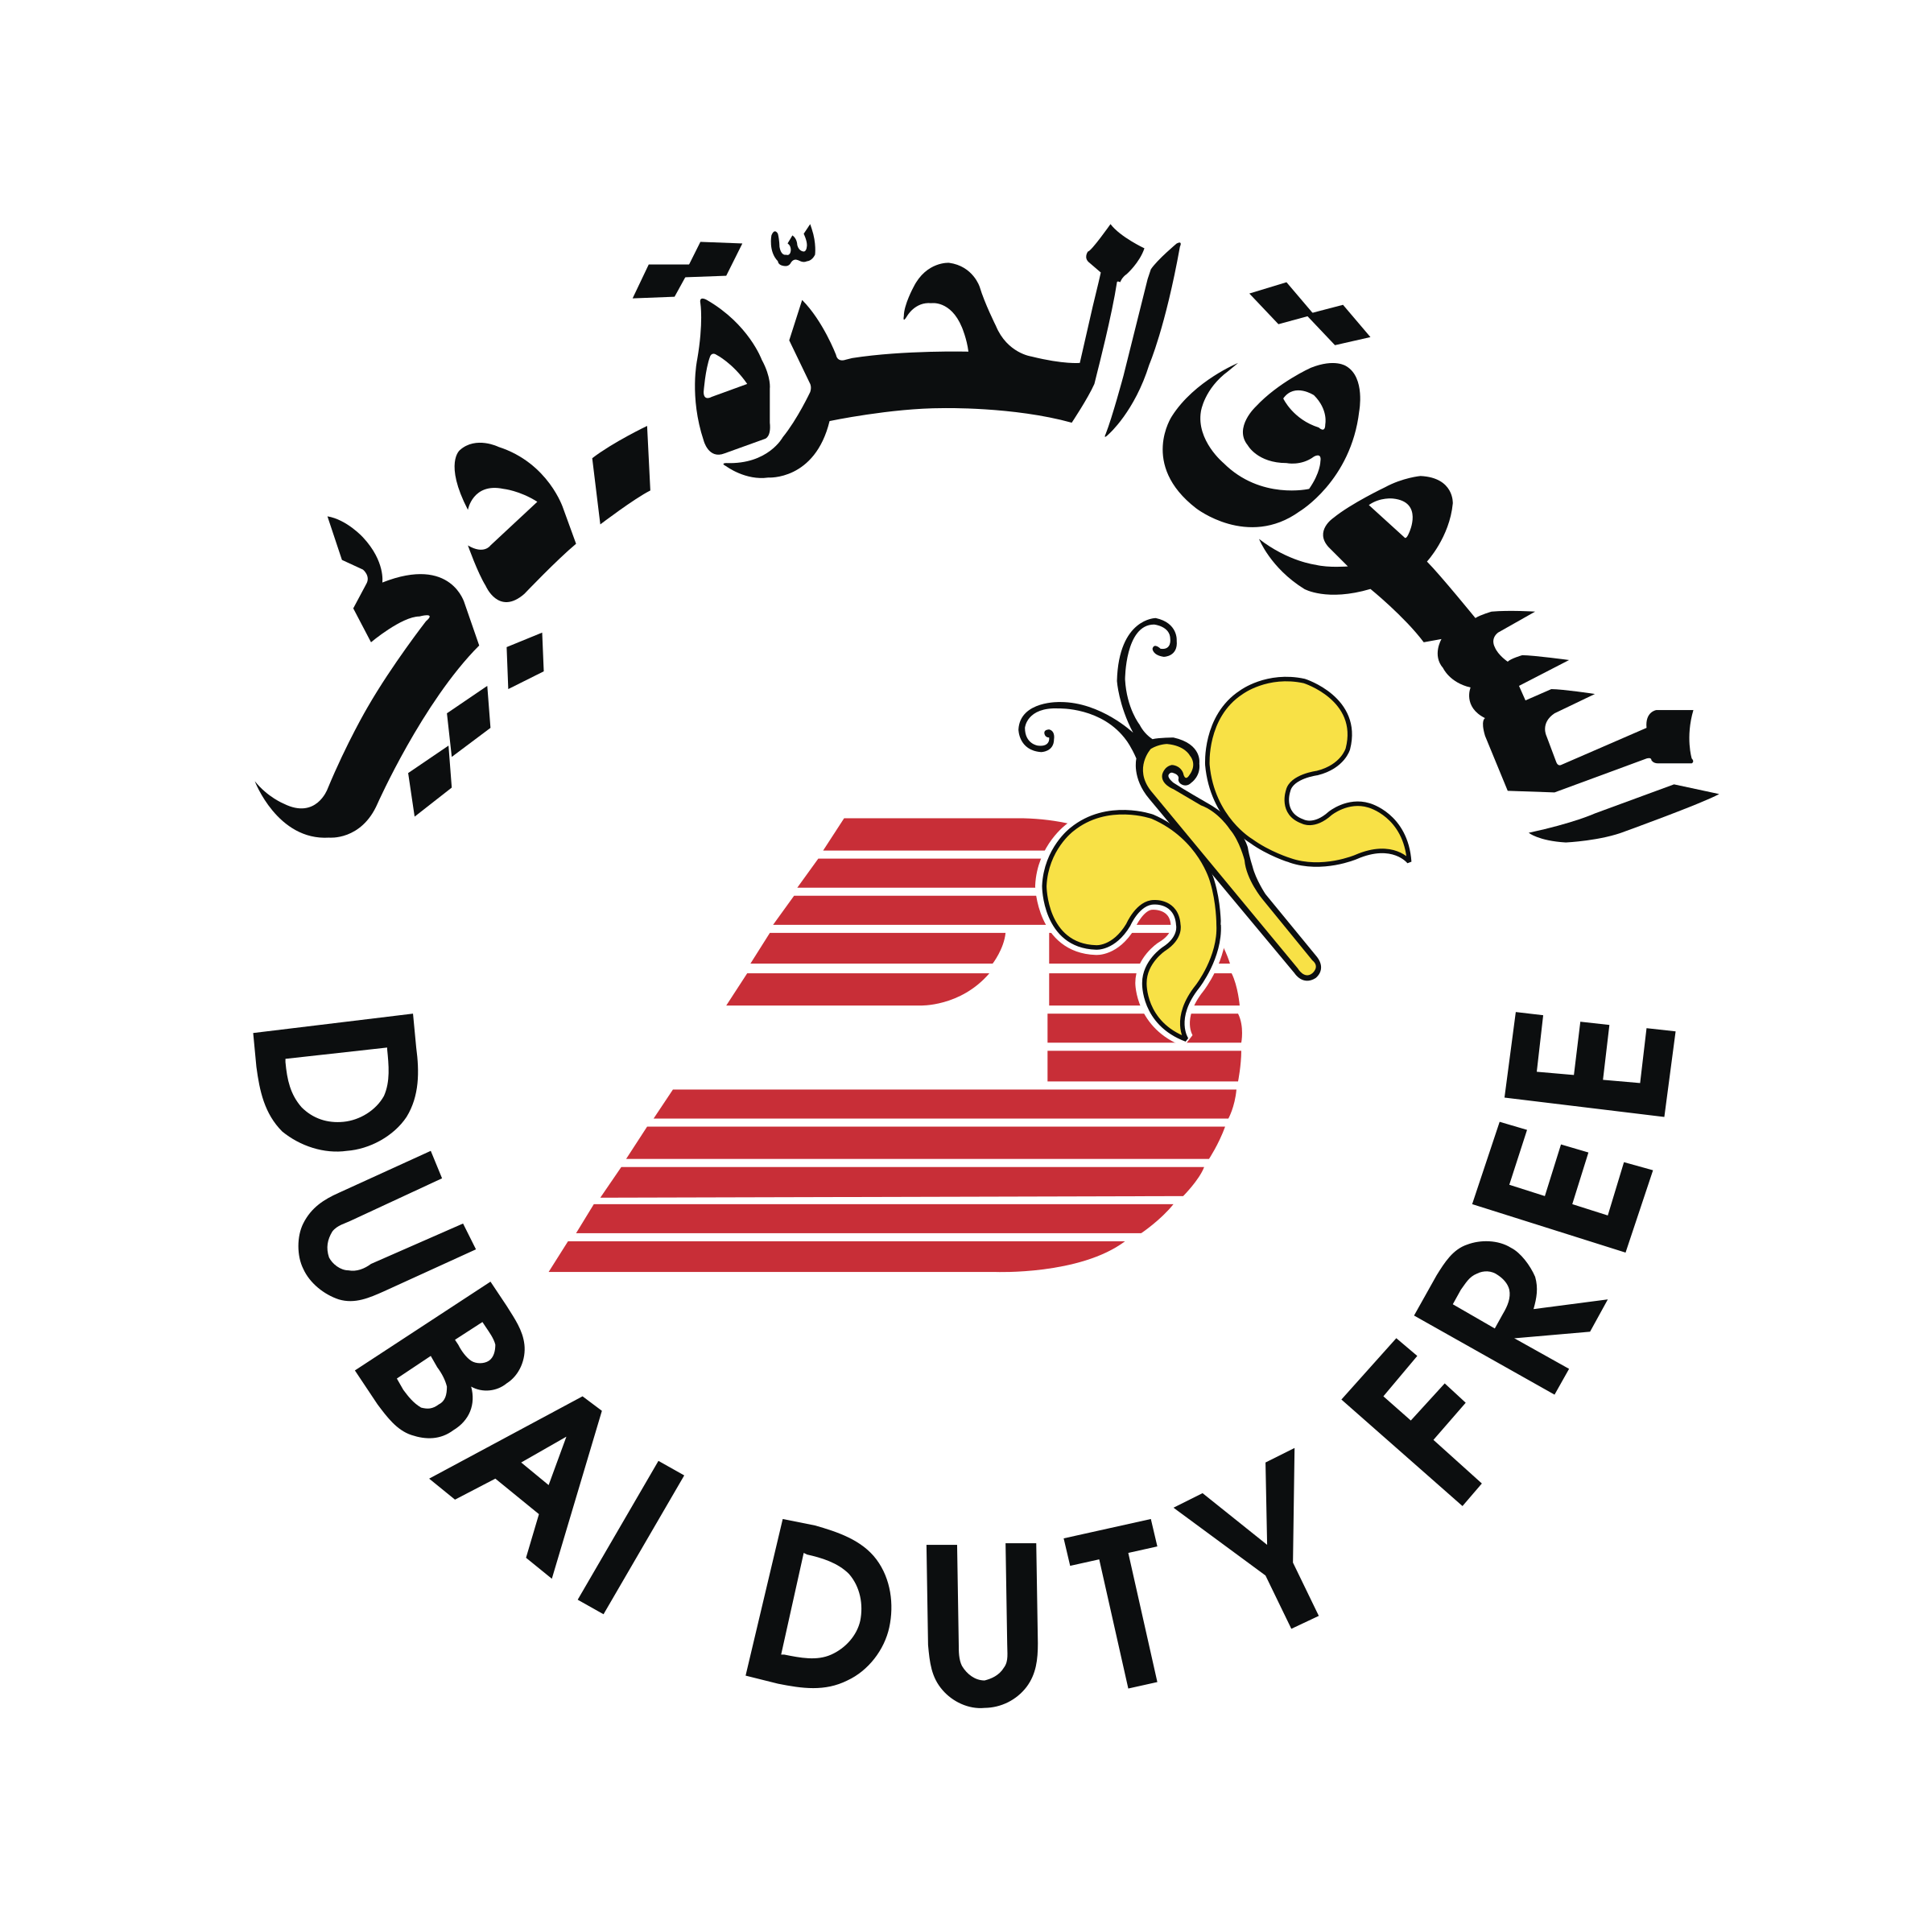 dubai-duty-free-logo-png-transparent